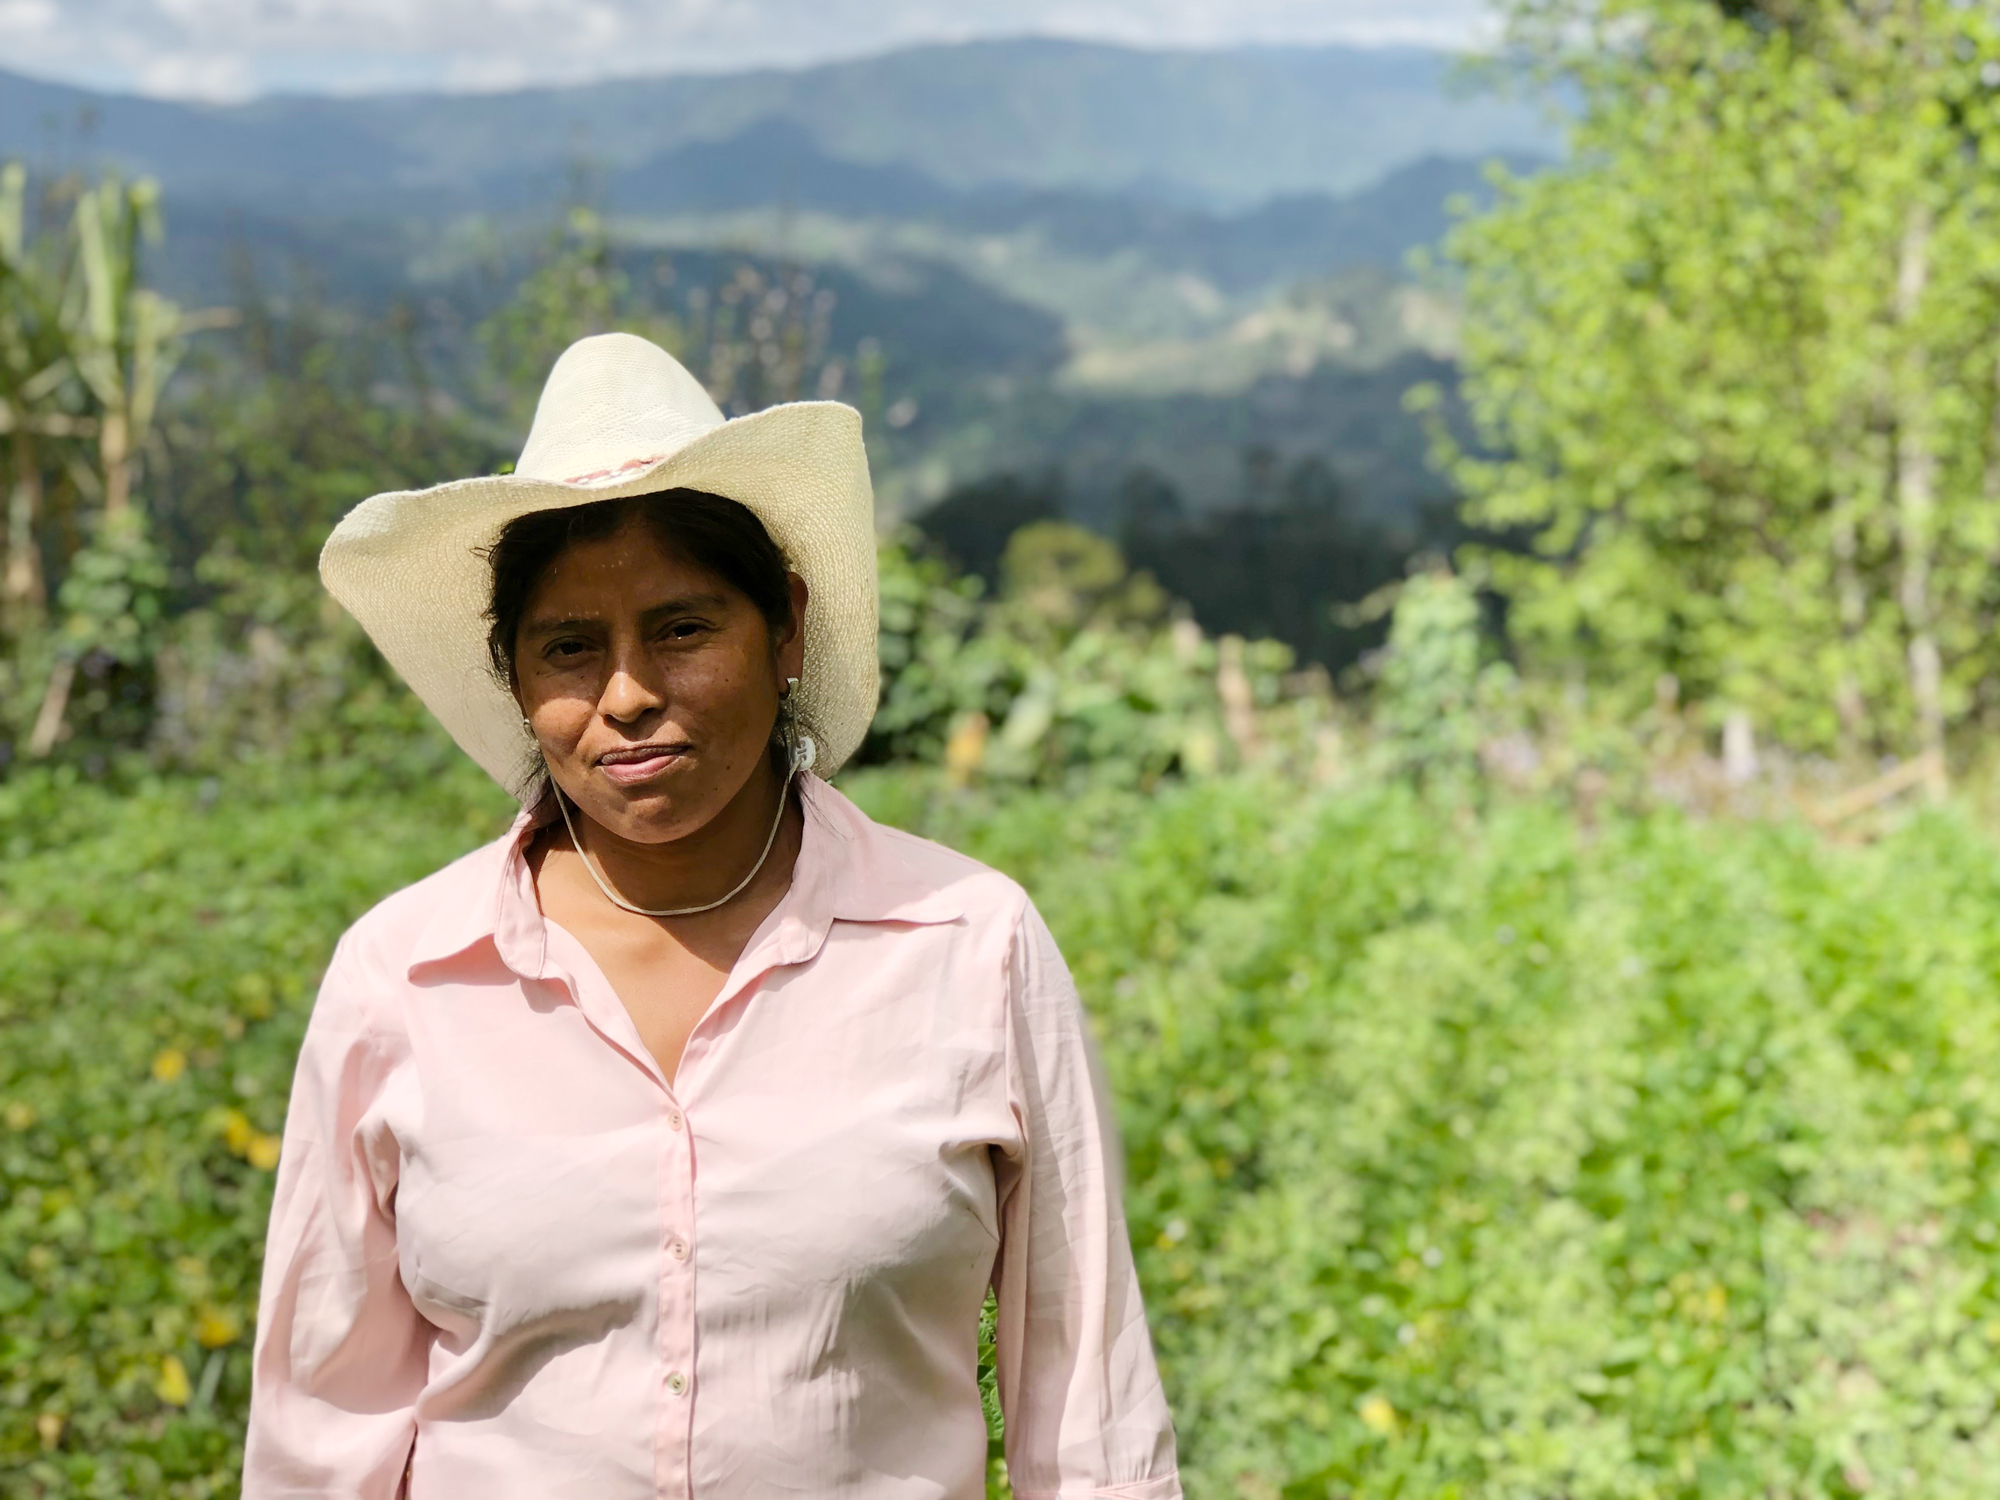 Woman in cowboy hat in a farm field in Honduras highlands